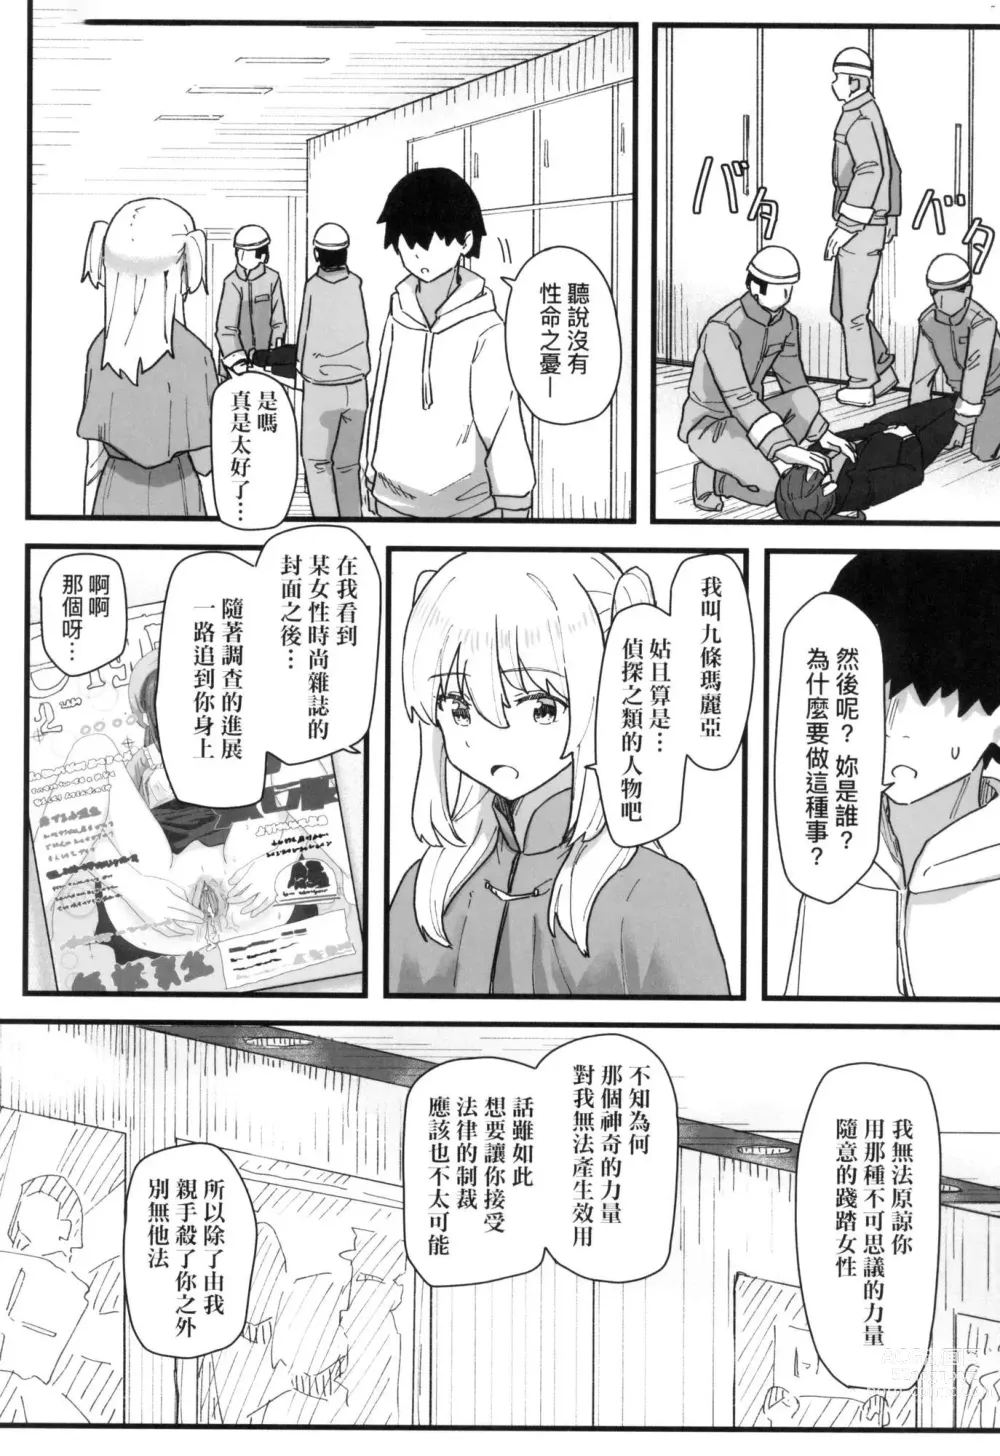 Page 151 of manga 常識改變活動紀錄 (decensored)